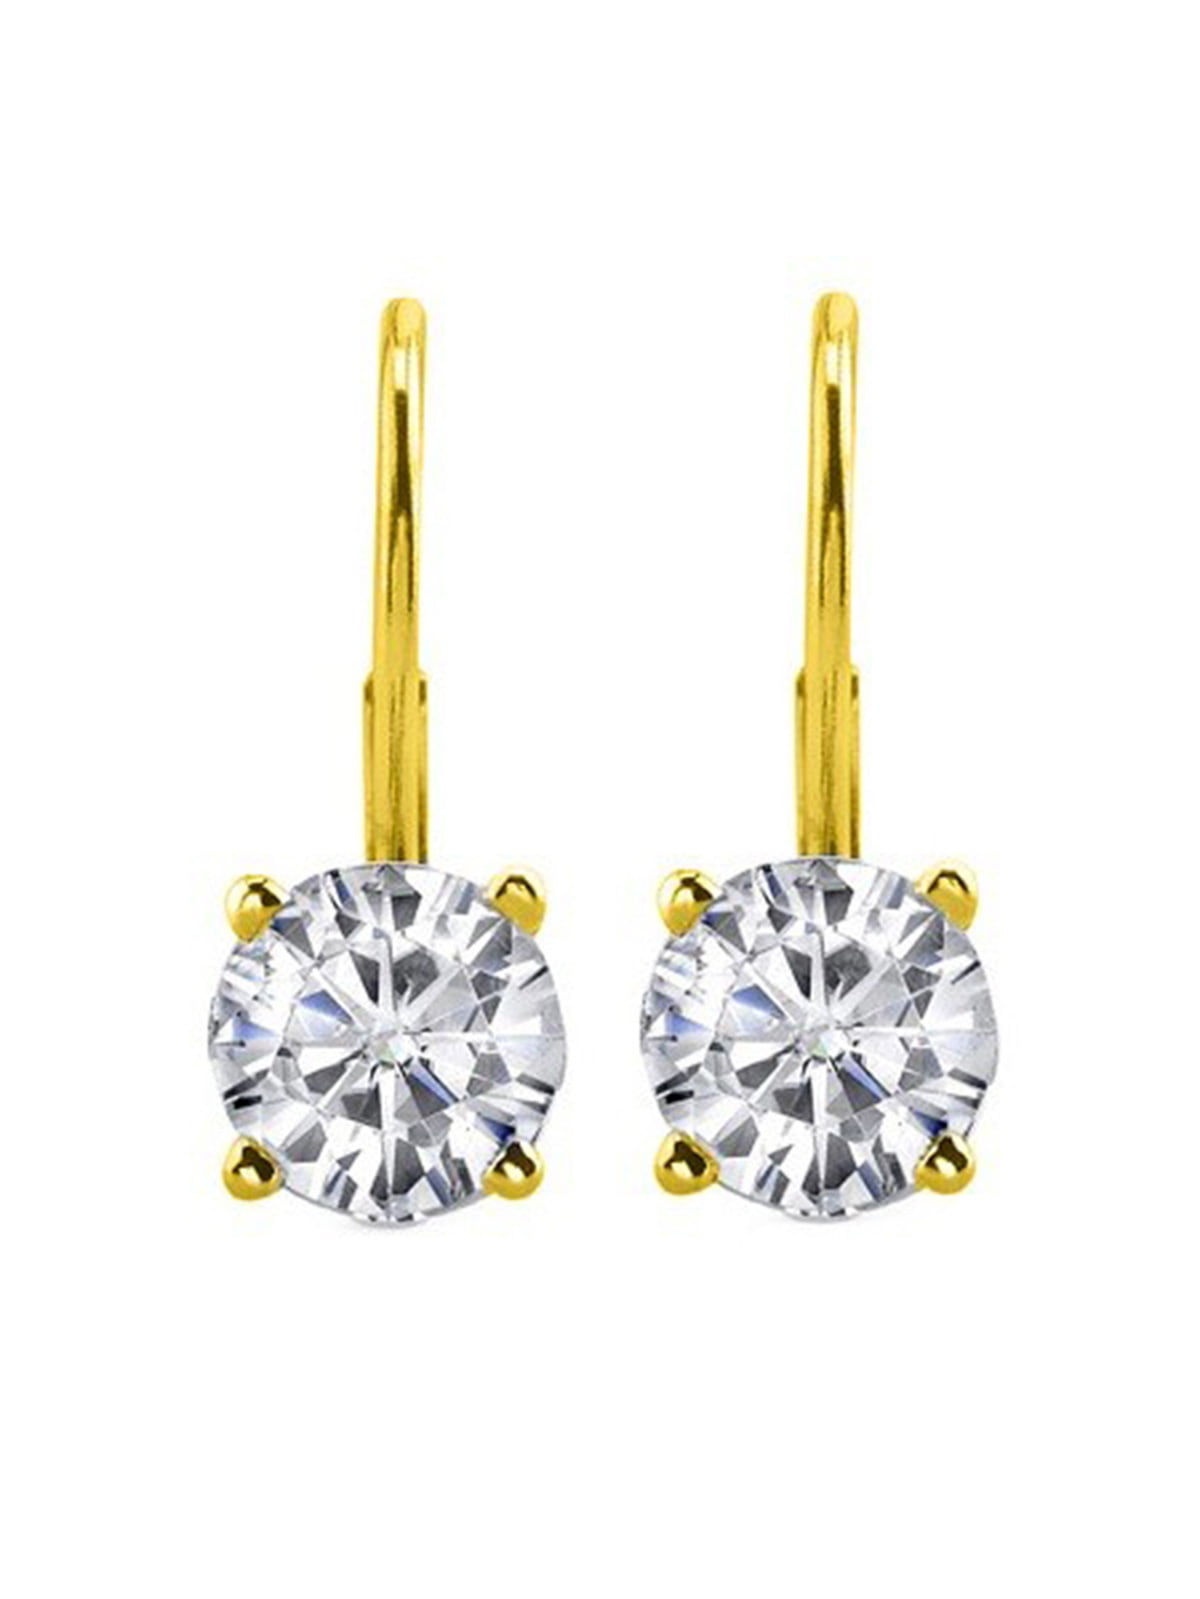 Bezel Set 3.10ct Heart Cut Diamond Push Back Stud Earrings 14k Rose Gold Plated 